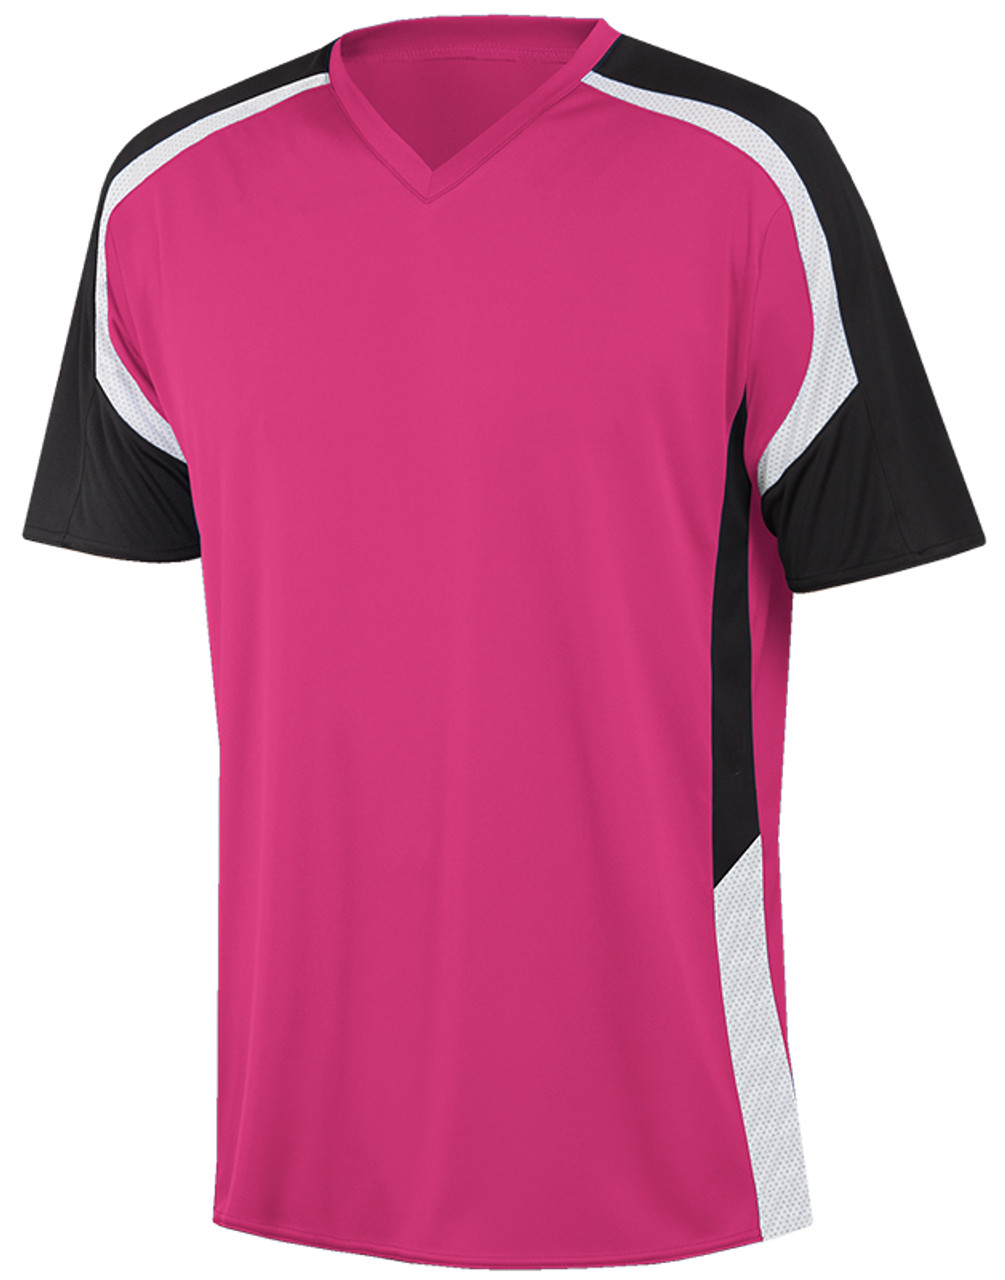 Oakland Athletics Youth Team Spirit Fashion Jersey - Pink